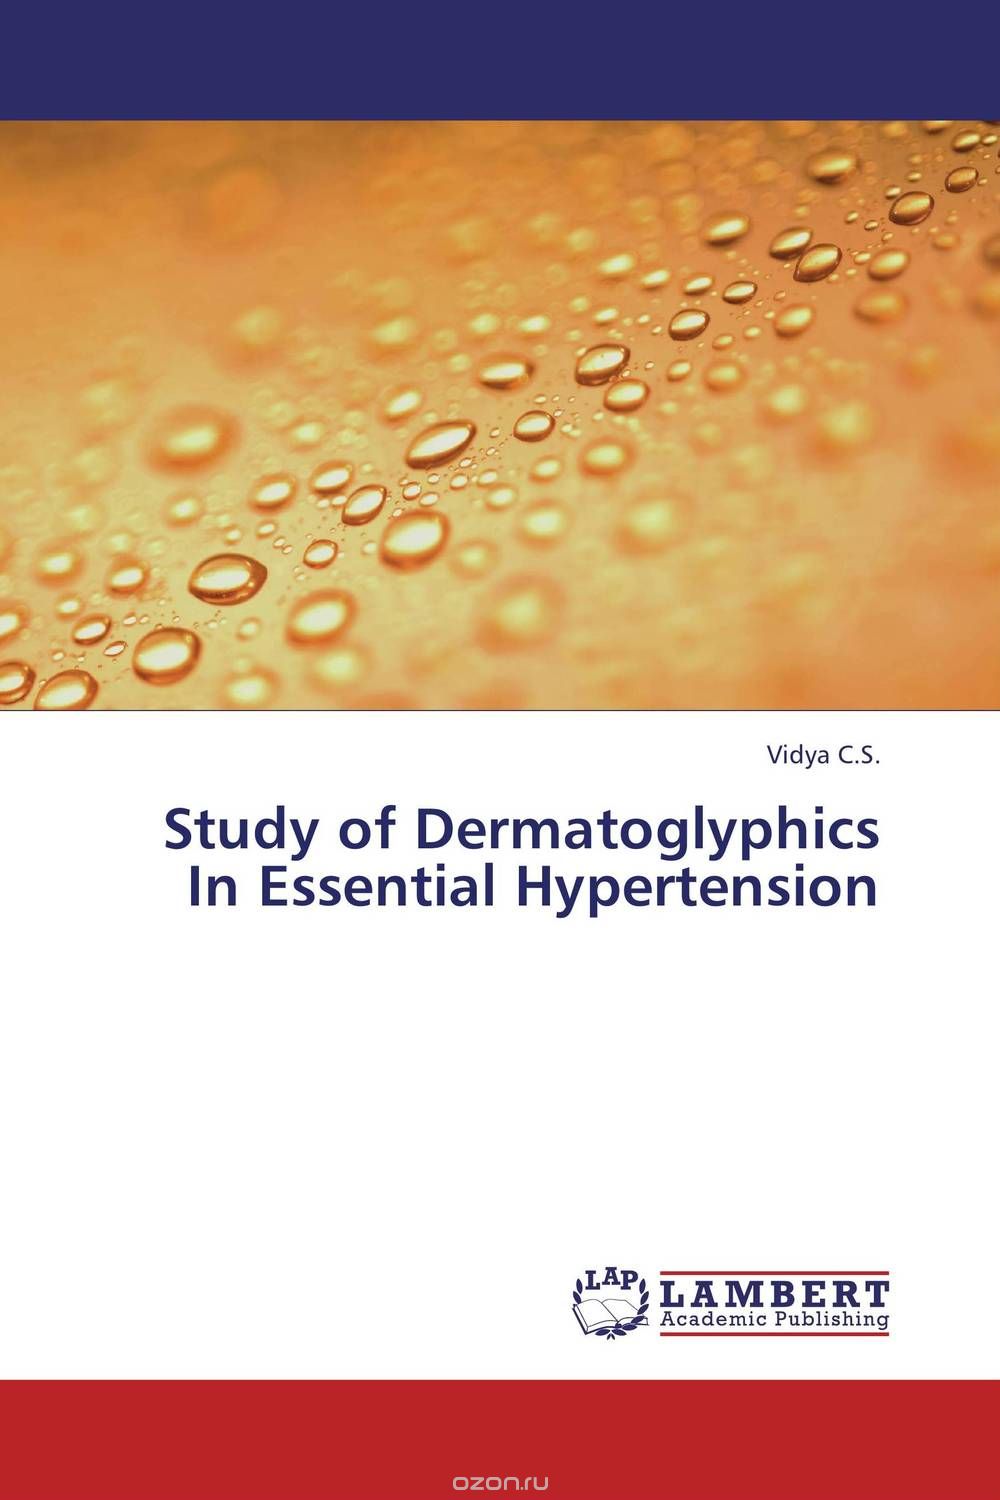 Скачать книгу "Study of Dermatoglyphics In Essential Hypertension"